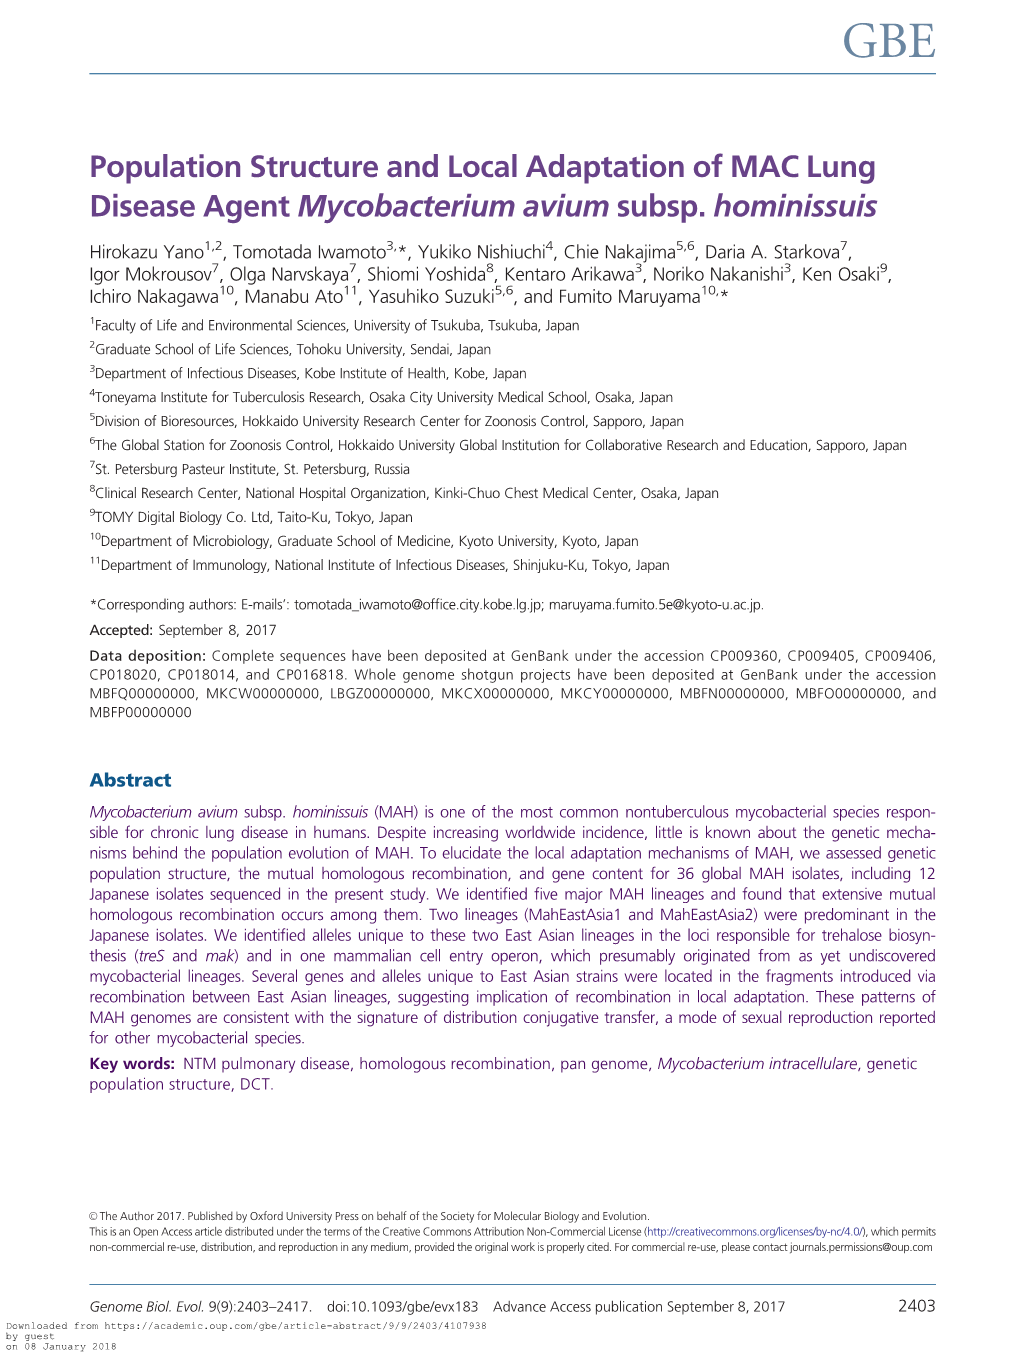 Population Structure and Local Adaptation of MAC Lung Disease Agent Mycobacterium Avium Subsp